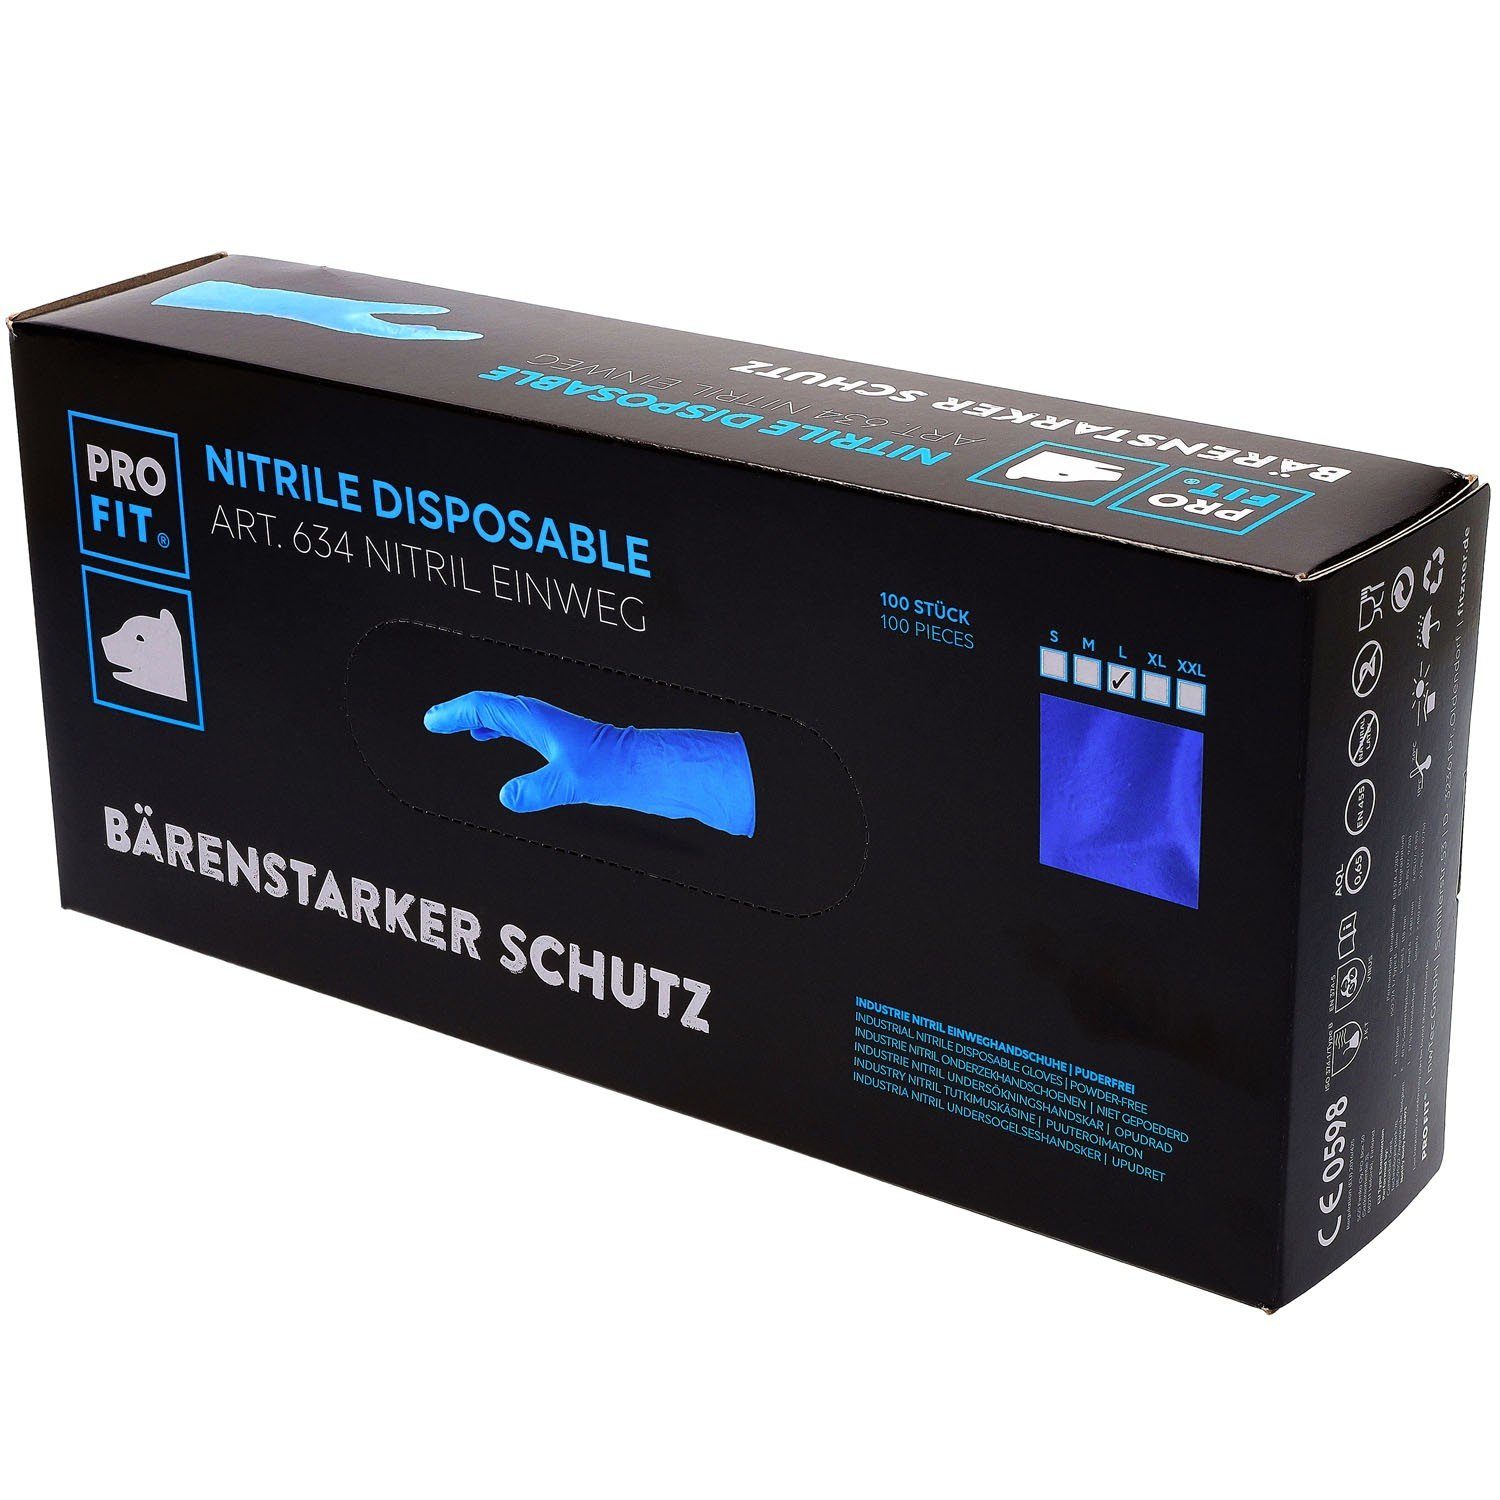 pro FIT Stück Fitzner Box PRO 100 Einweghandschuhe Nitril-Einweghandschuh, by